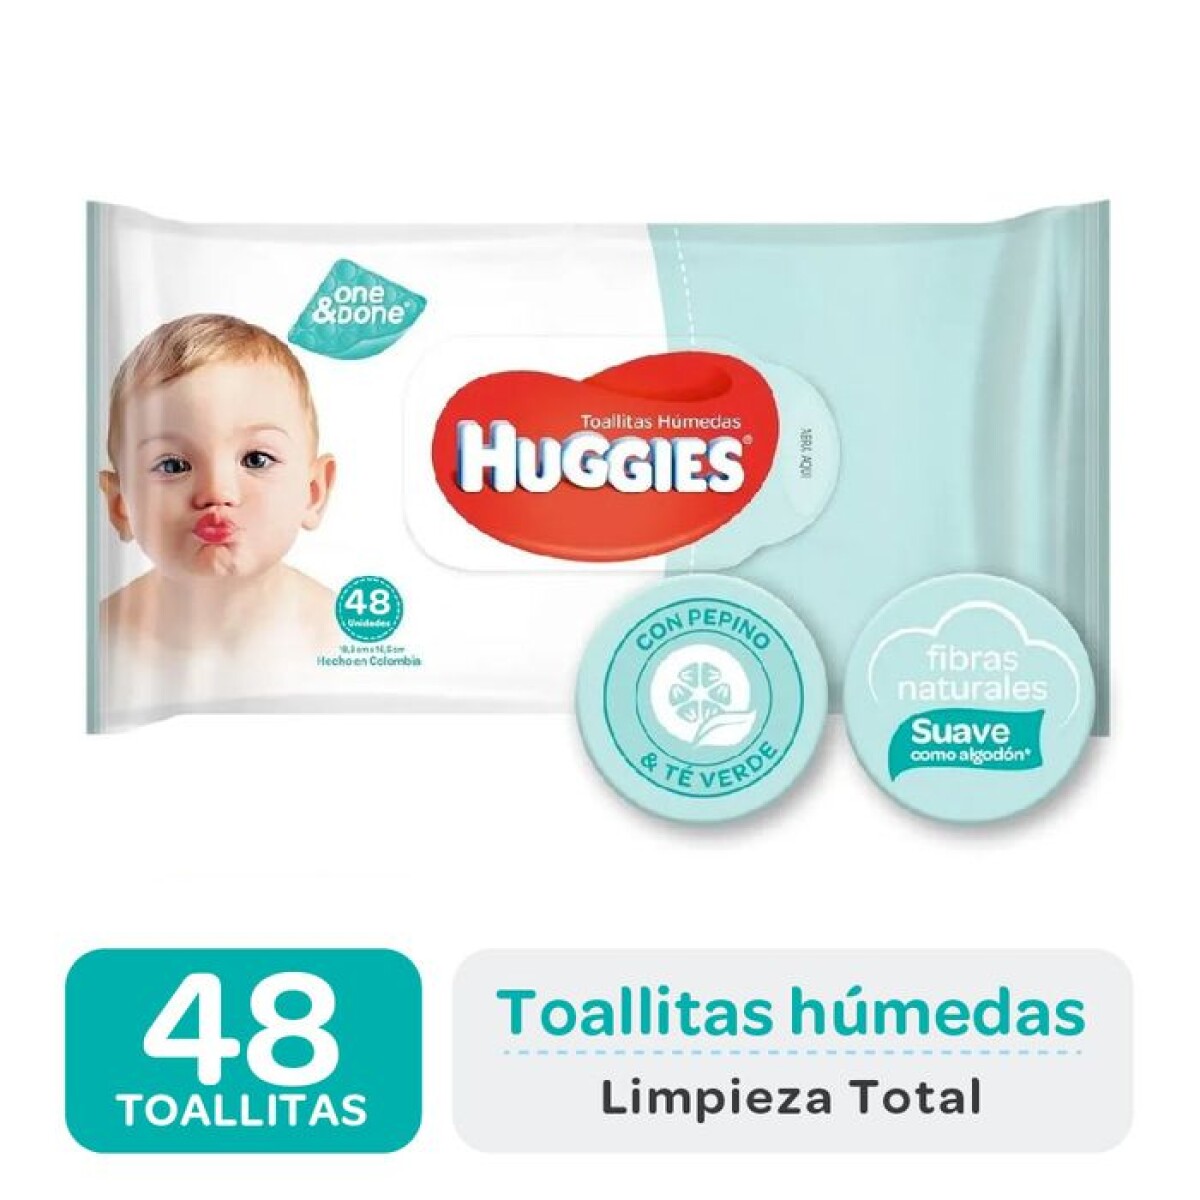 TOALLITAS HUMEDAS HUGGIES PURO Y NATURAL X48 